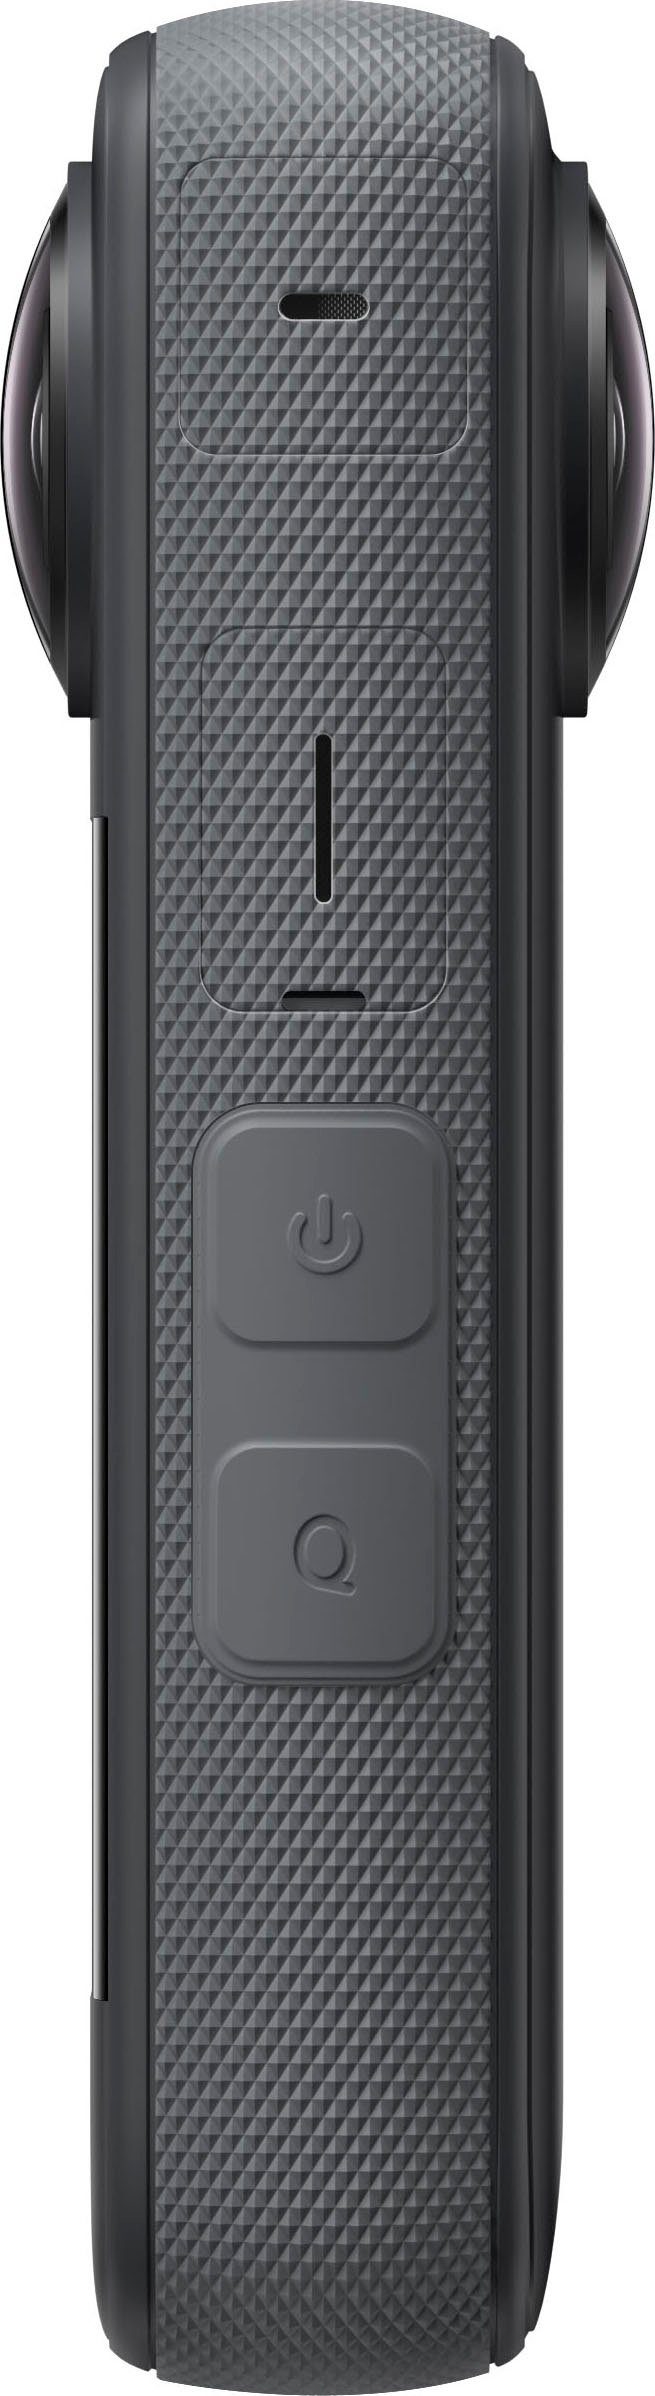 X3 Creator Camcorder Bluetooth, Insta360 Kit (5,7K, (Wi-Fi) WLAN